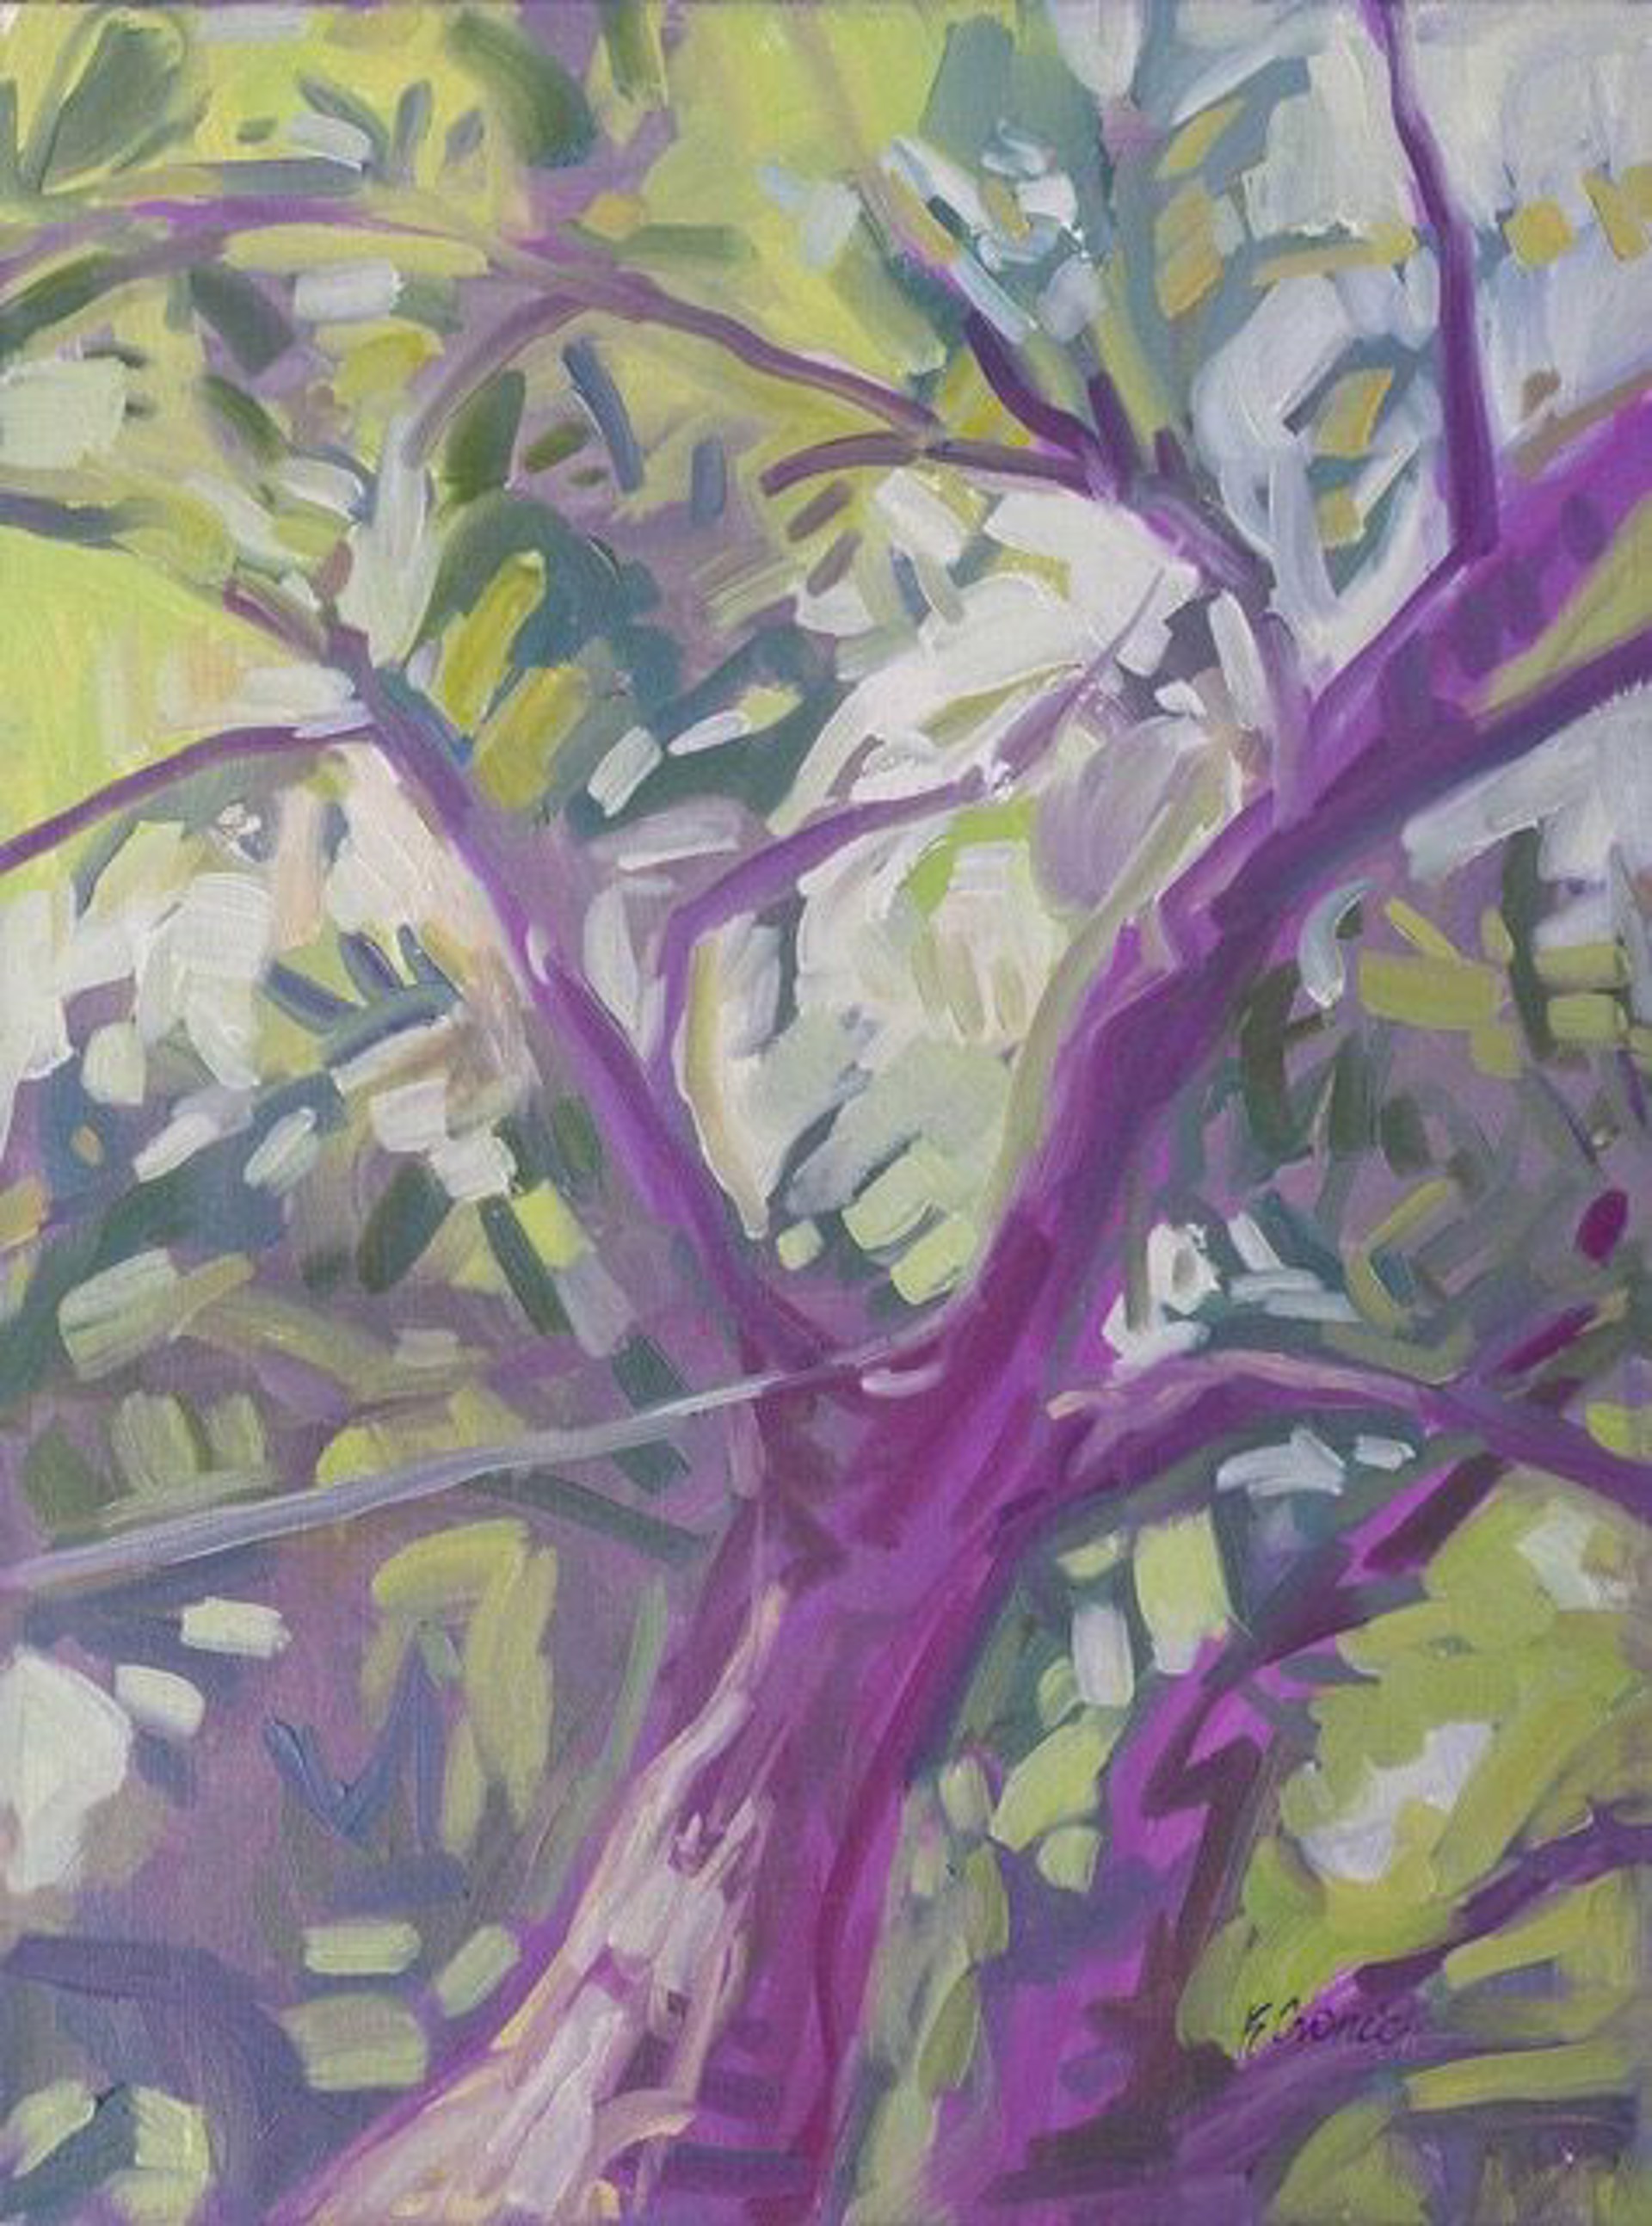 Tree Swing by Kristin Cronic